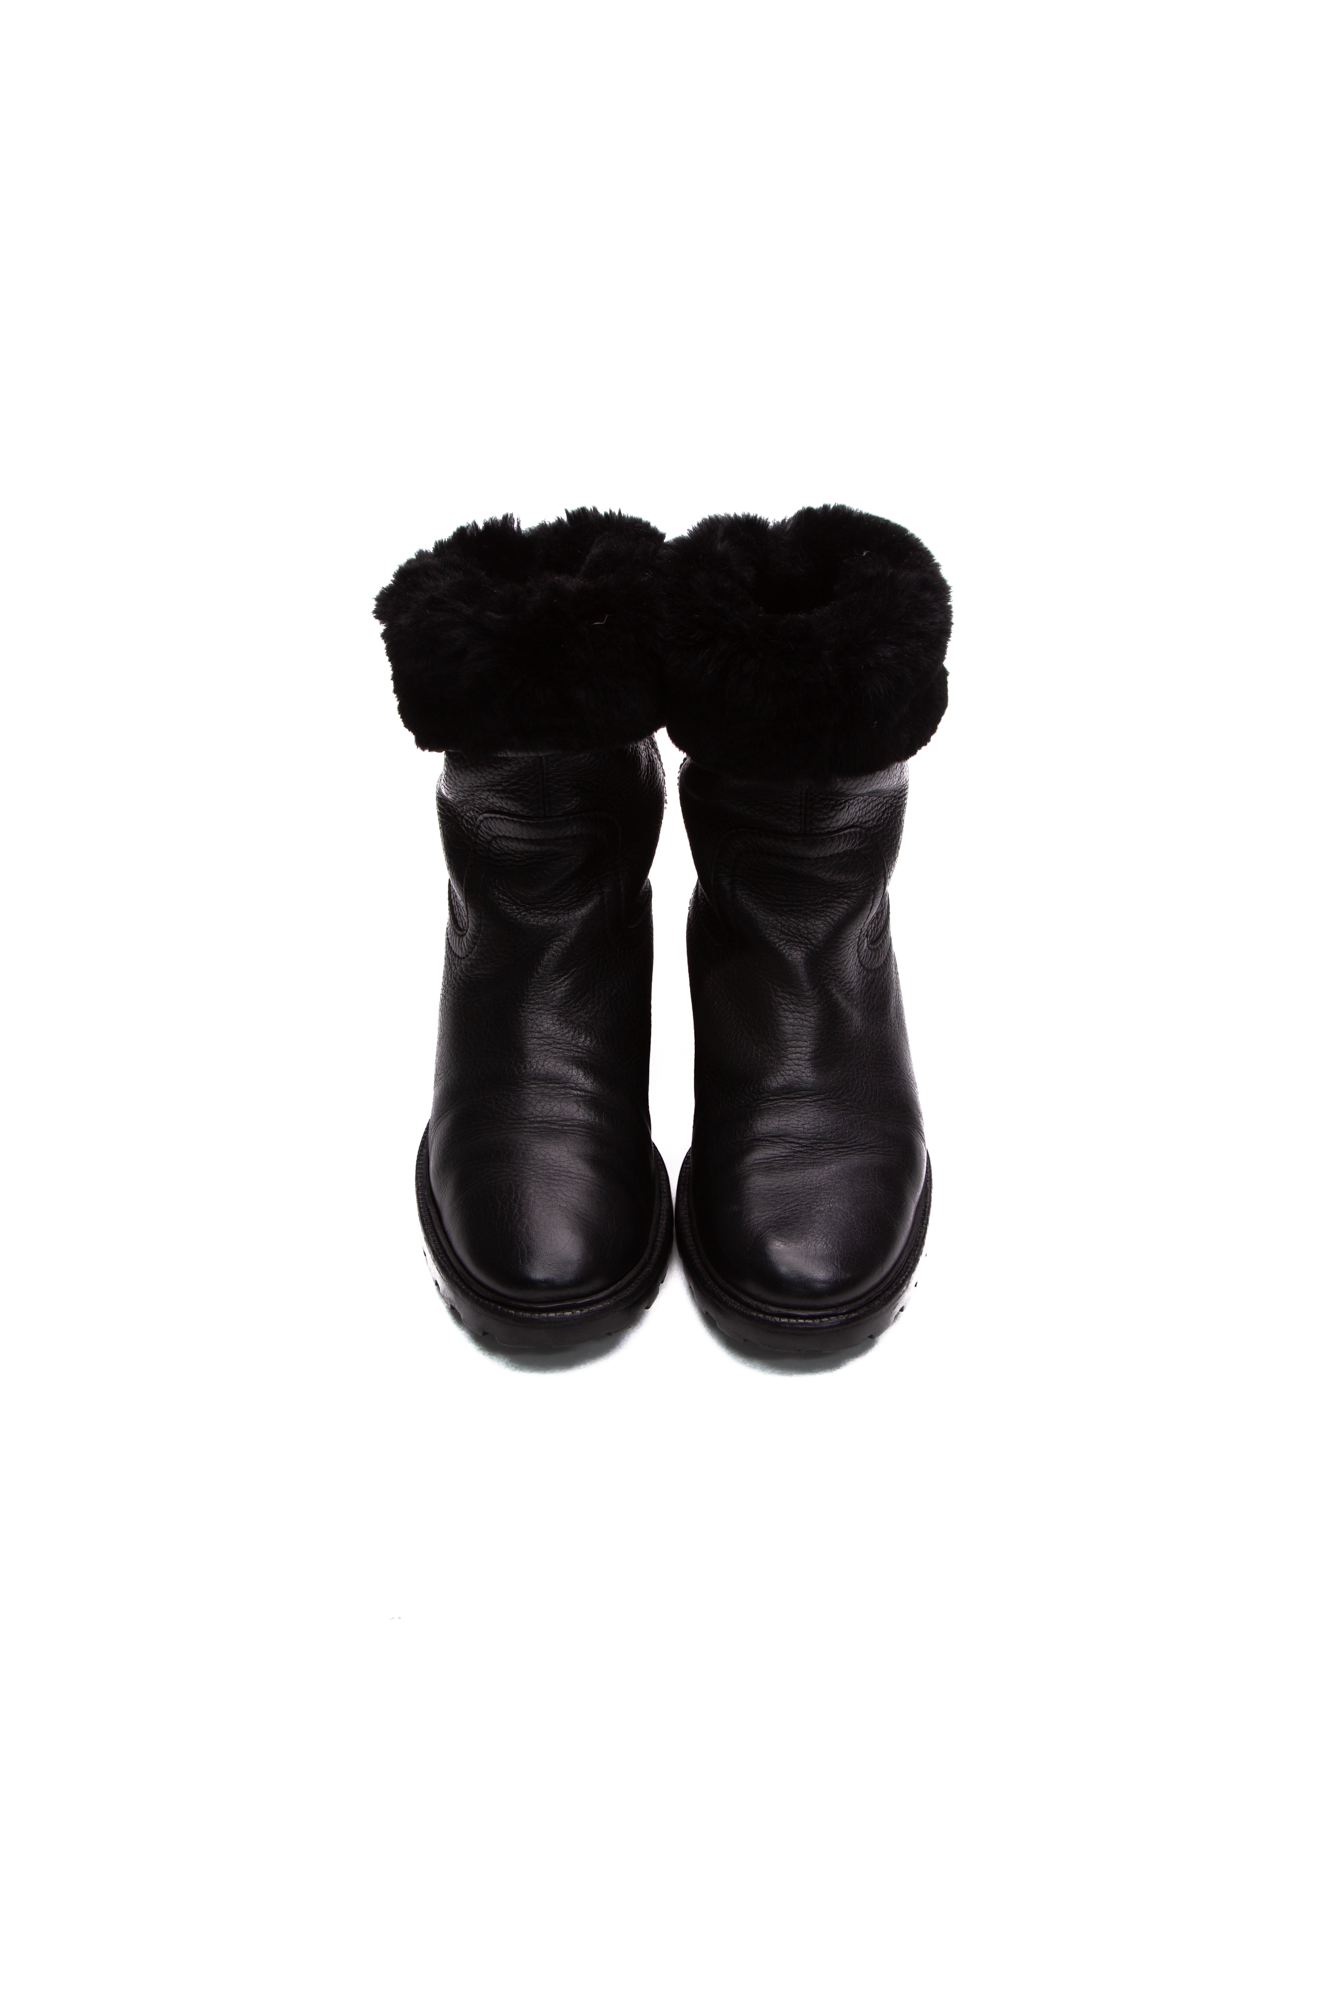 Gucci Web Fur Boots - Size 38